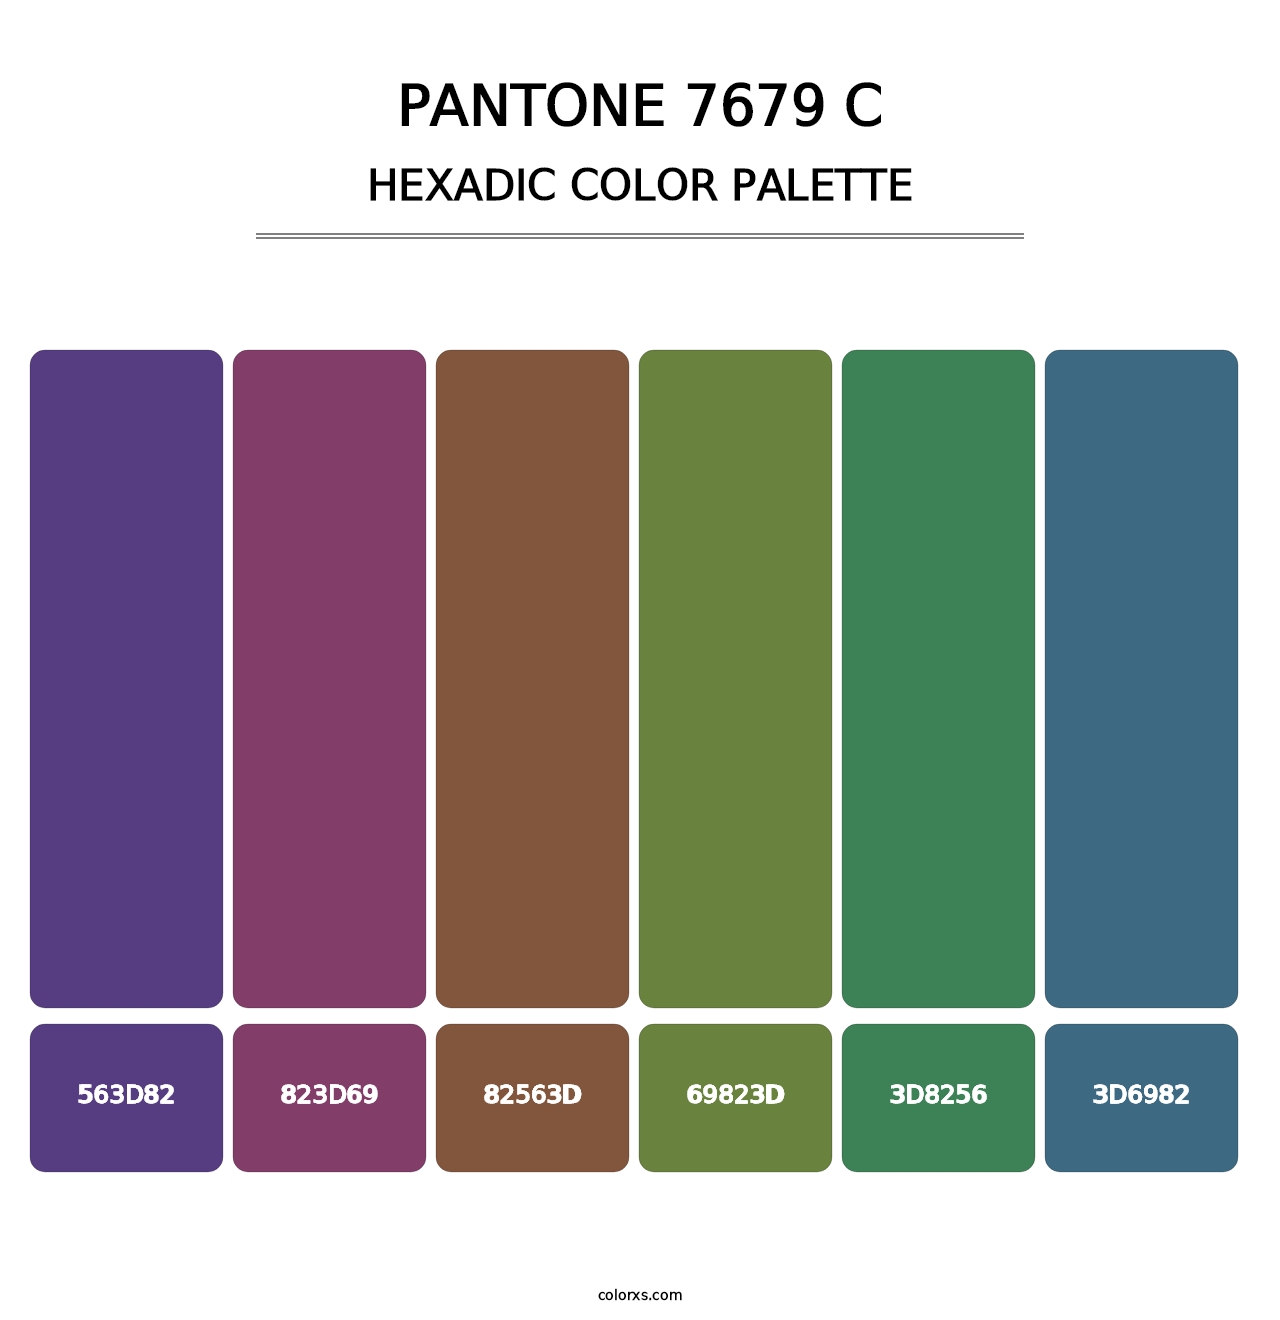 PANTONE 7679 C - Hexadic Color Palette